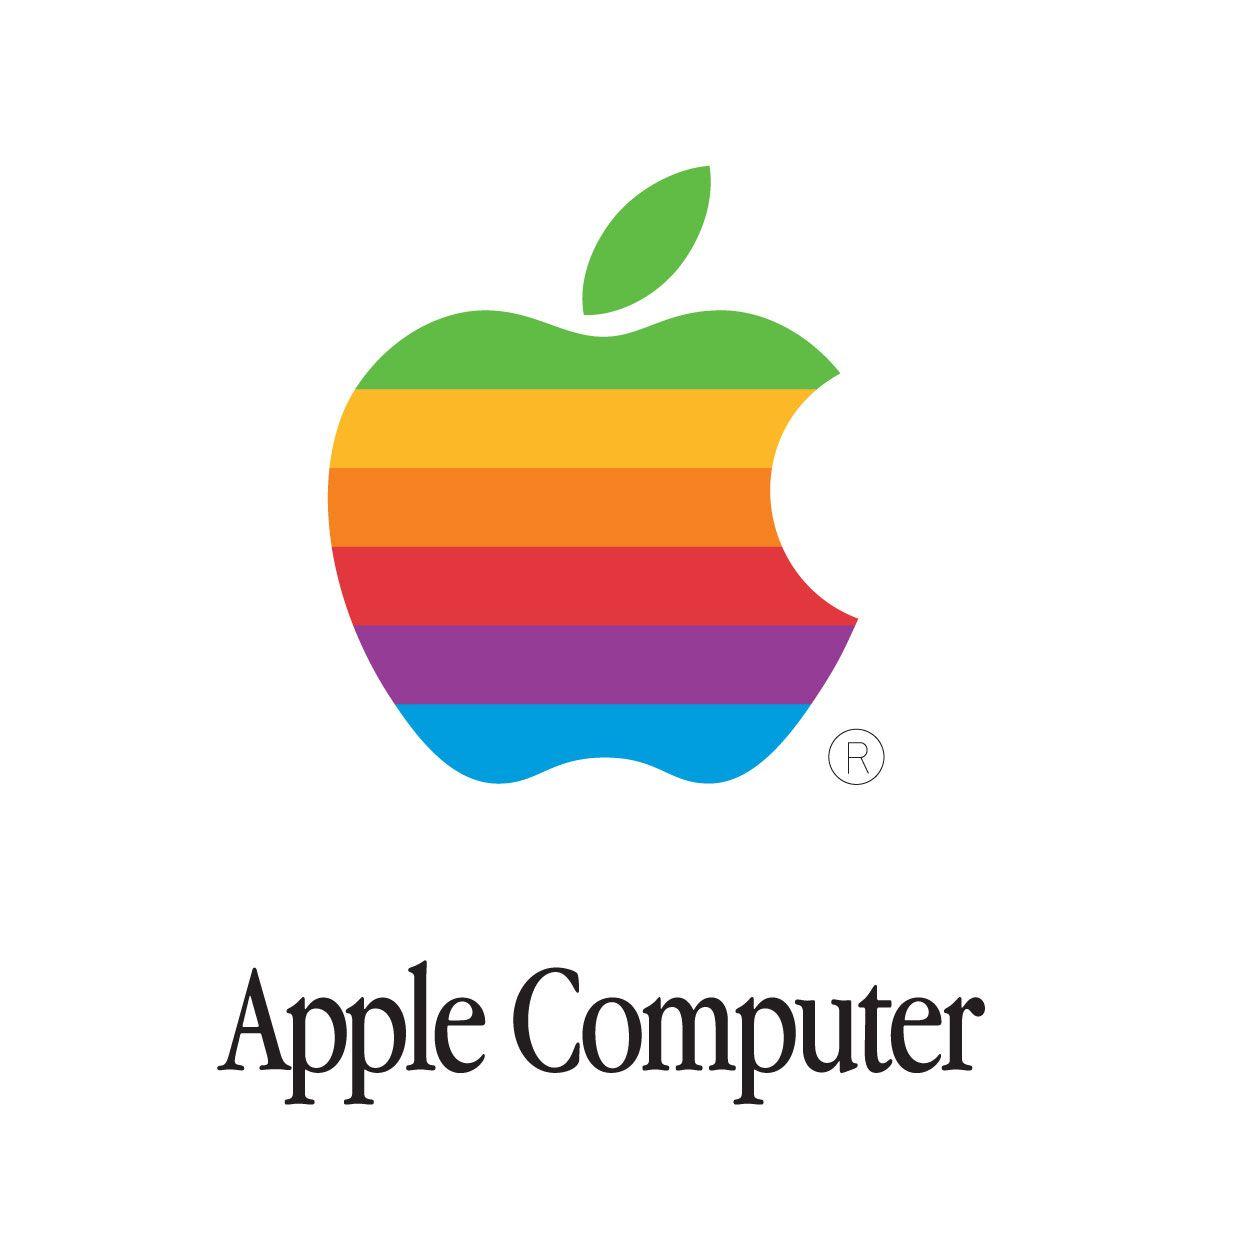 Old Macintosh Logo - Old-Apple-Computer-Logo - The Technology Geek